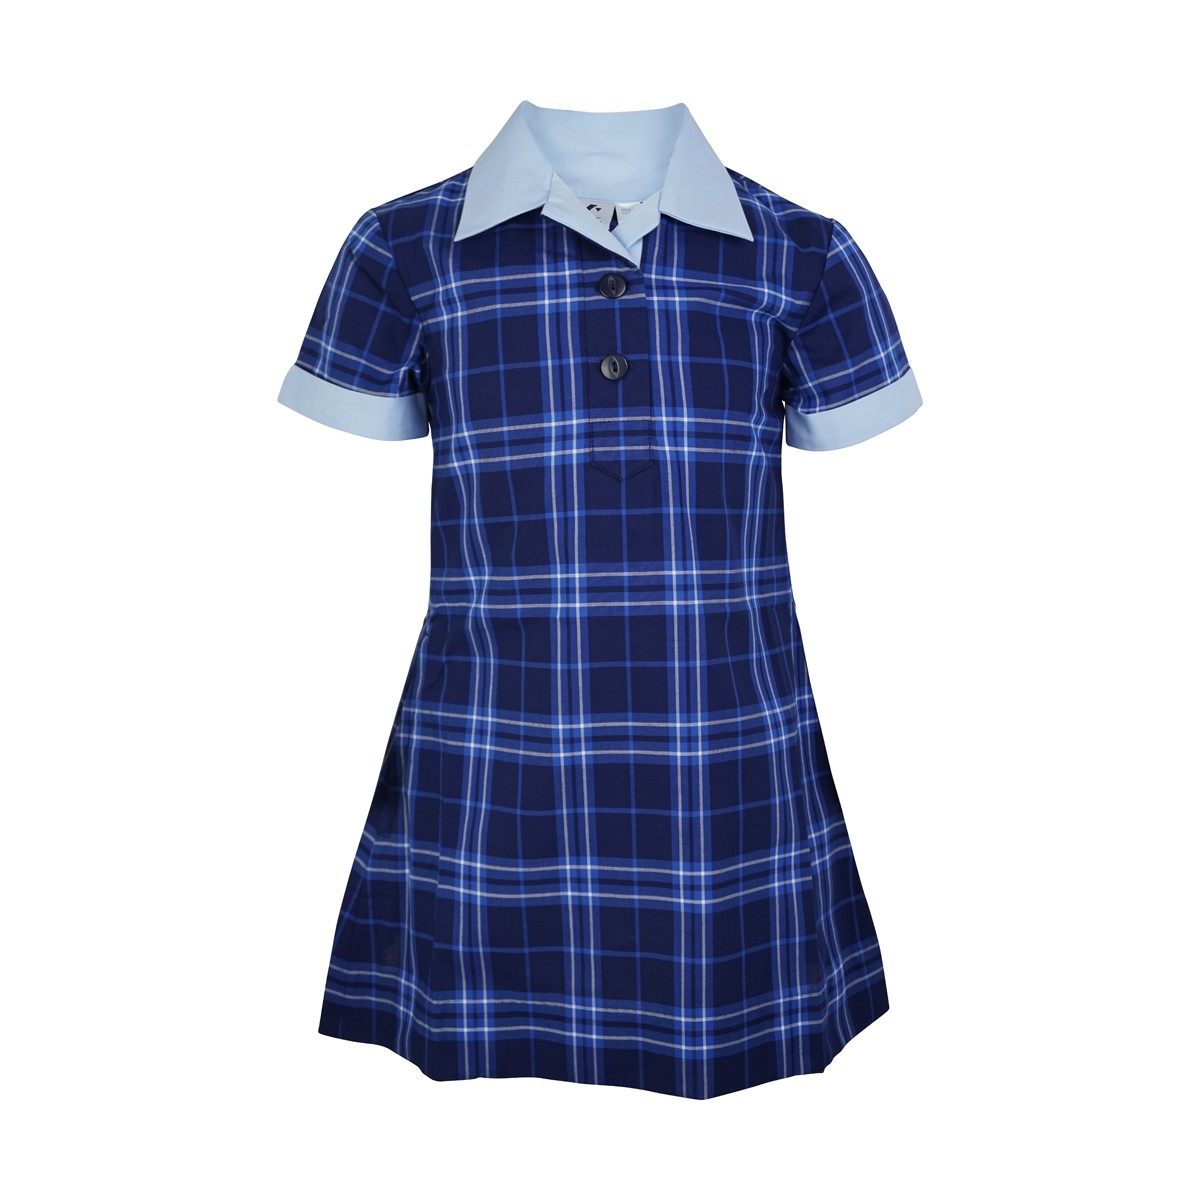 blue checked school dress